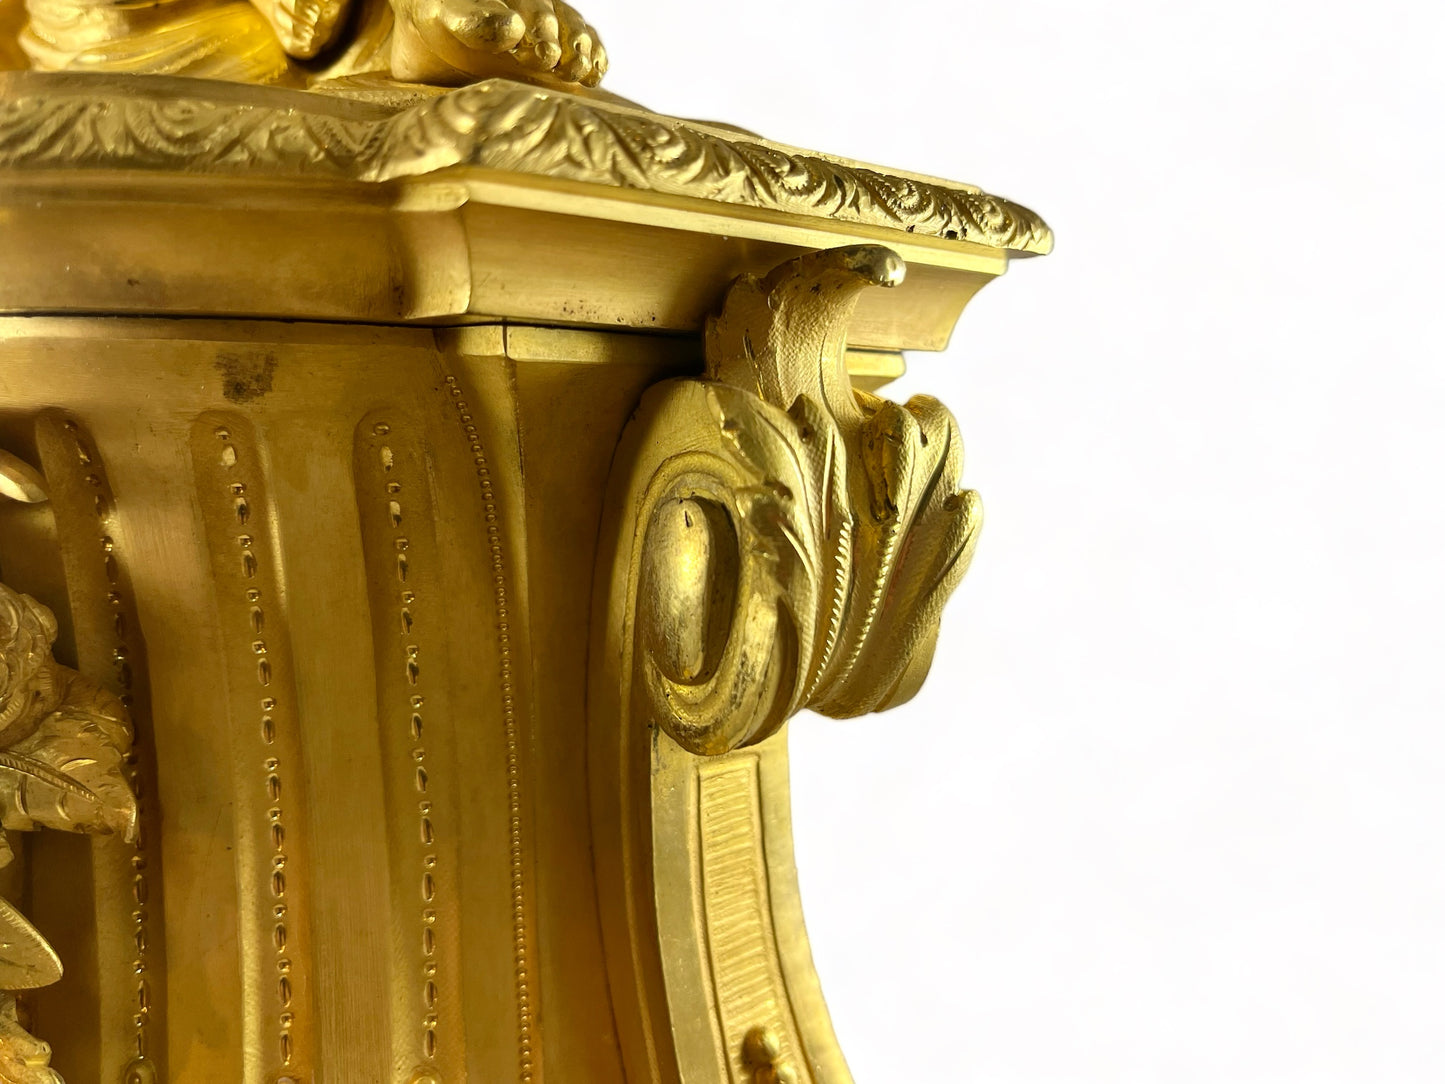 Antique 19th century Napoleon the 3rd gilt ormolu mantel clock